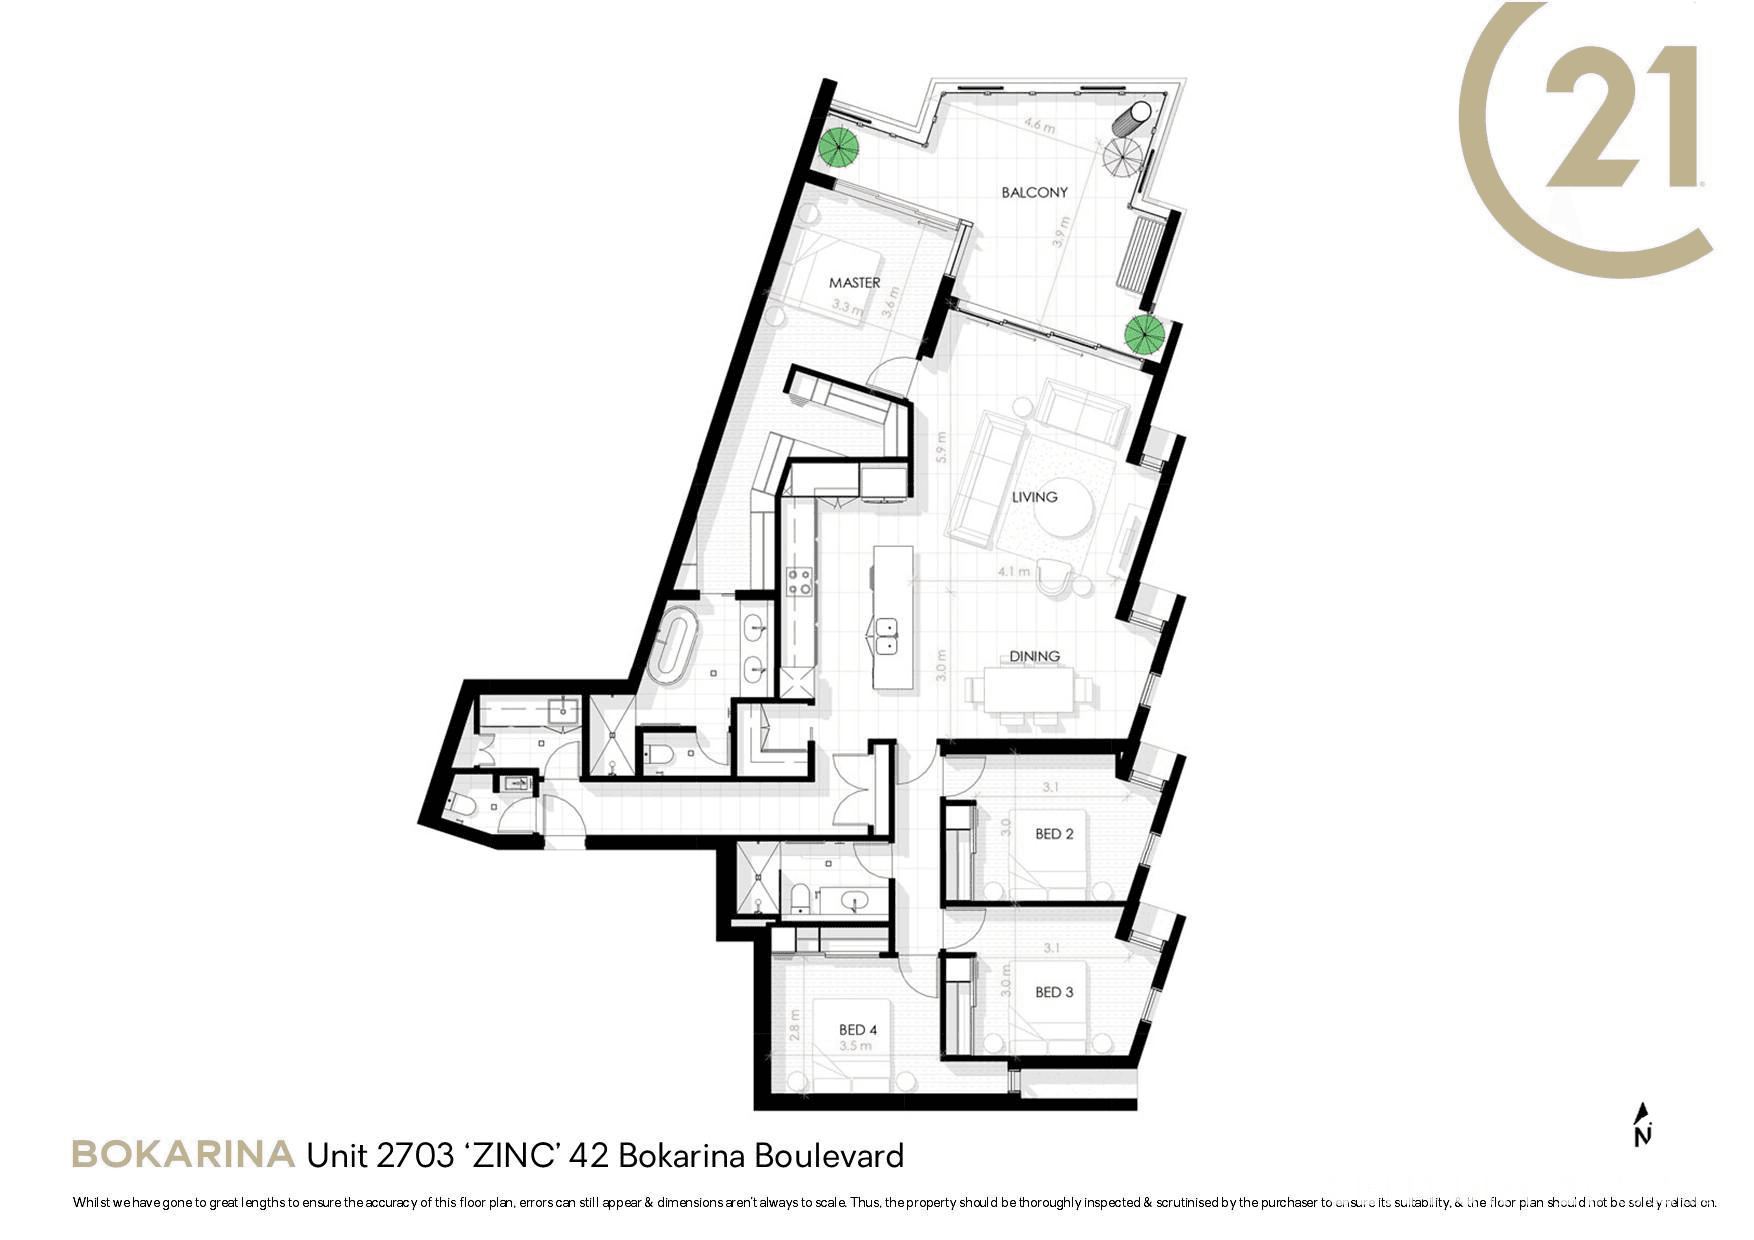 Unit 2703 'ZINC' 42 Bokarina Boulevard, BOKARINA, QLD 4575